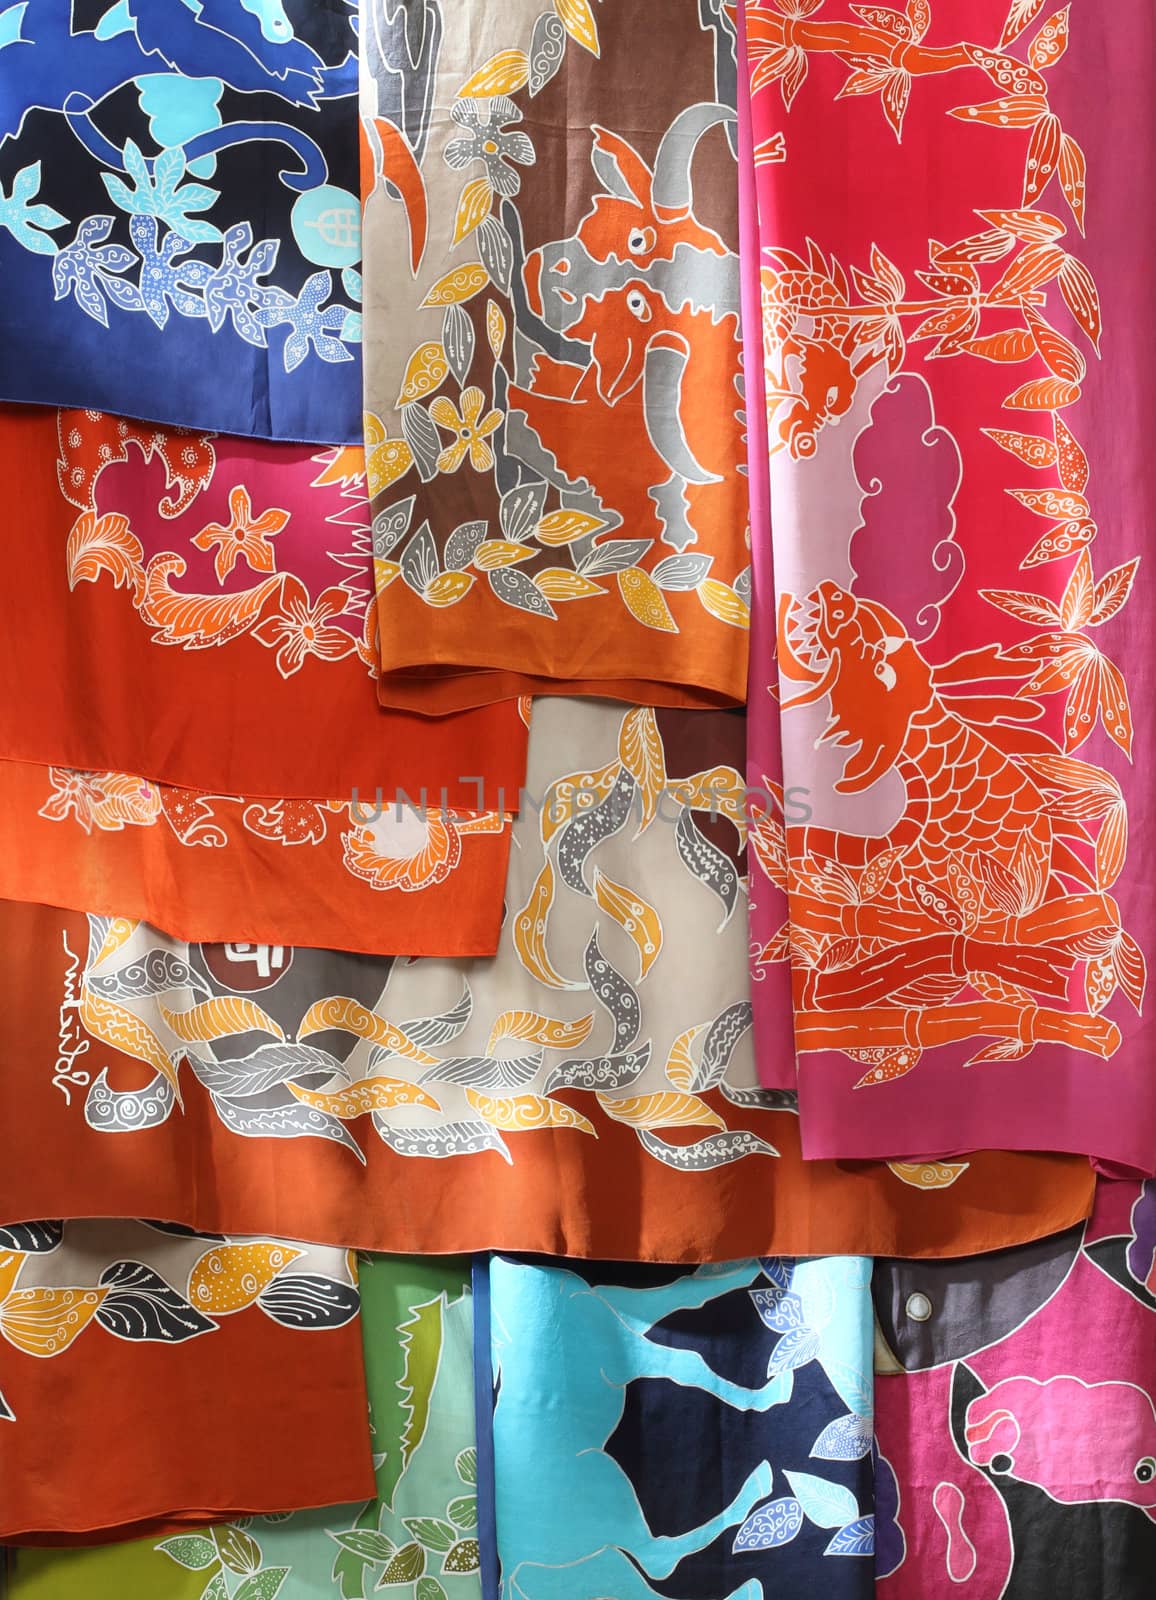 Indonesian Batik backgrounds by photosoup